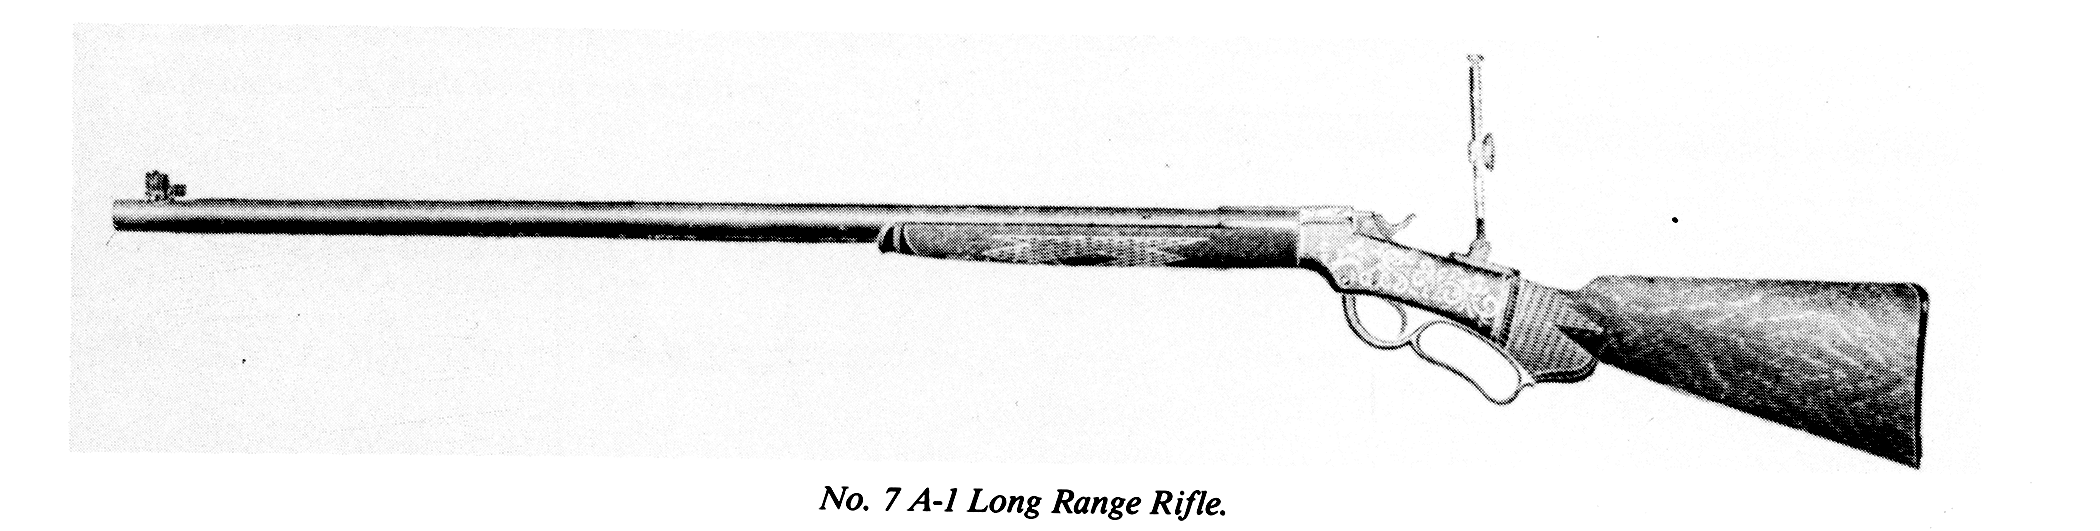 Ballard No. 7A-1 Long Range Rifle